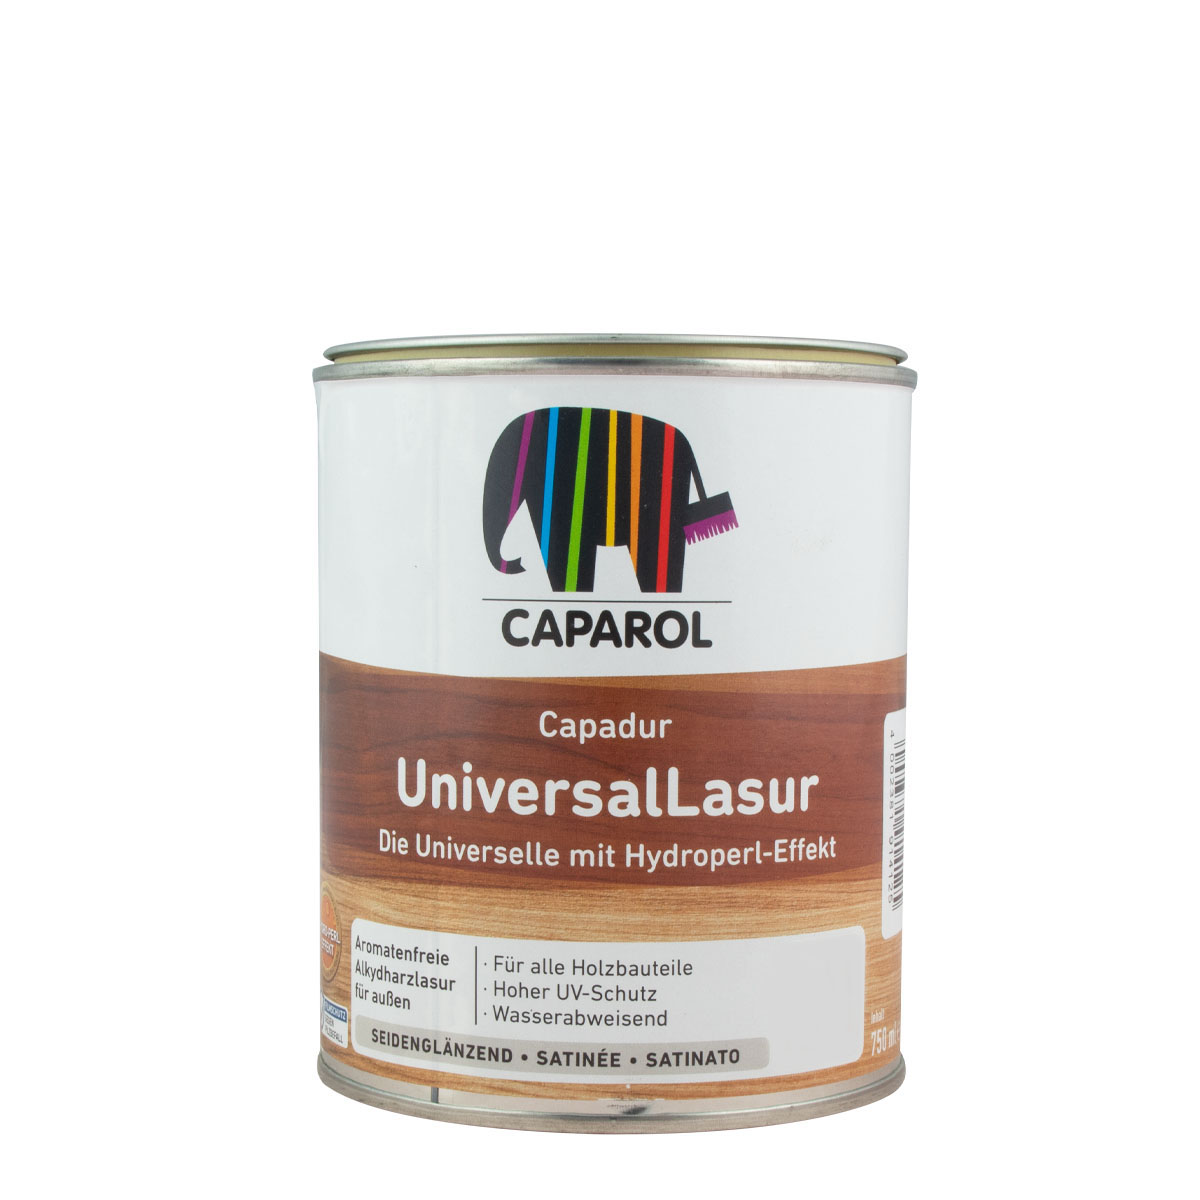 Caparol_capadur_UniversalLasur_750ml_gross